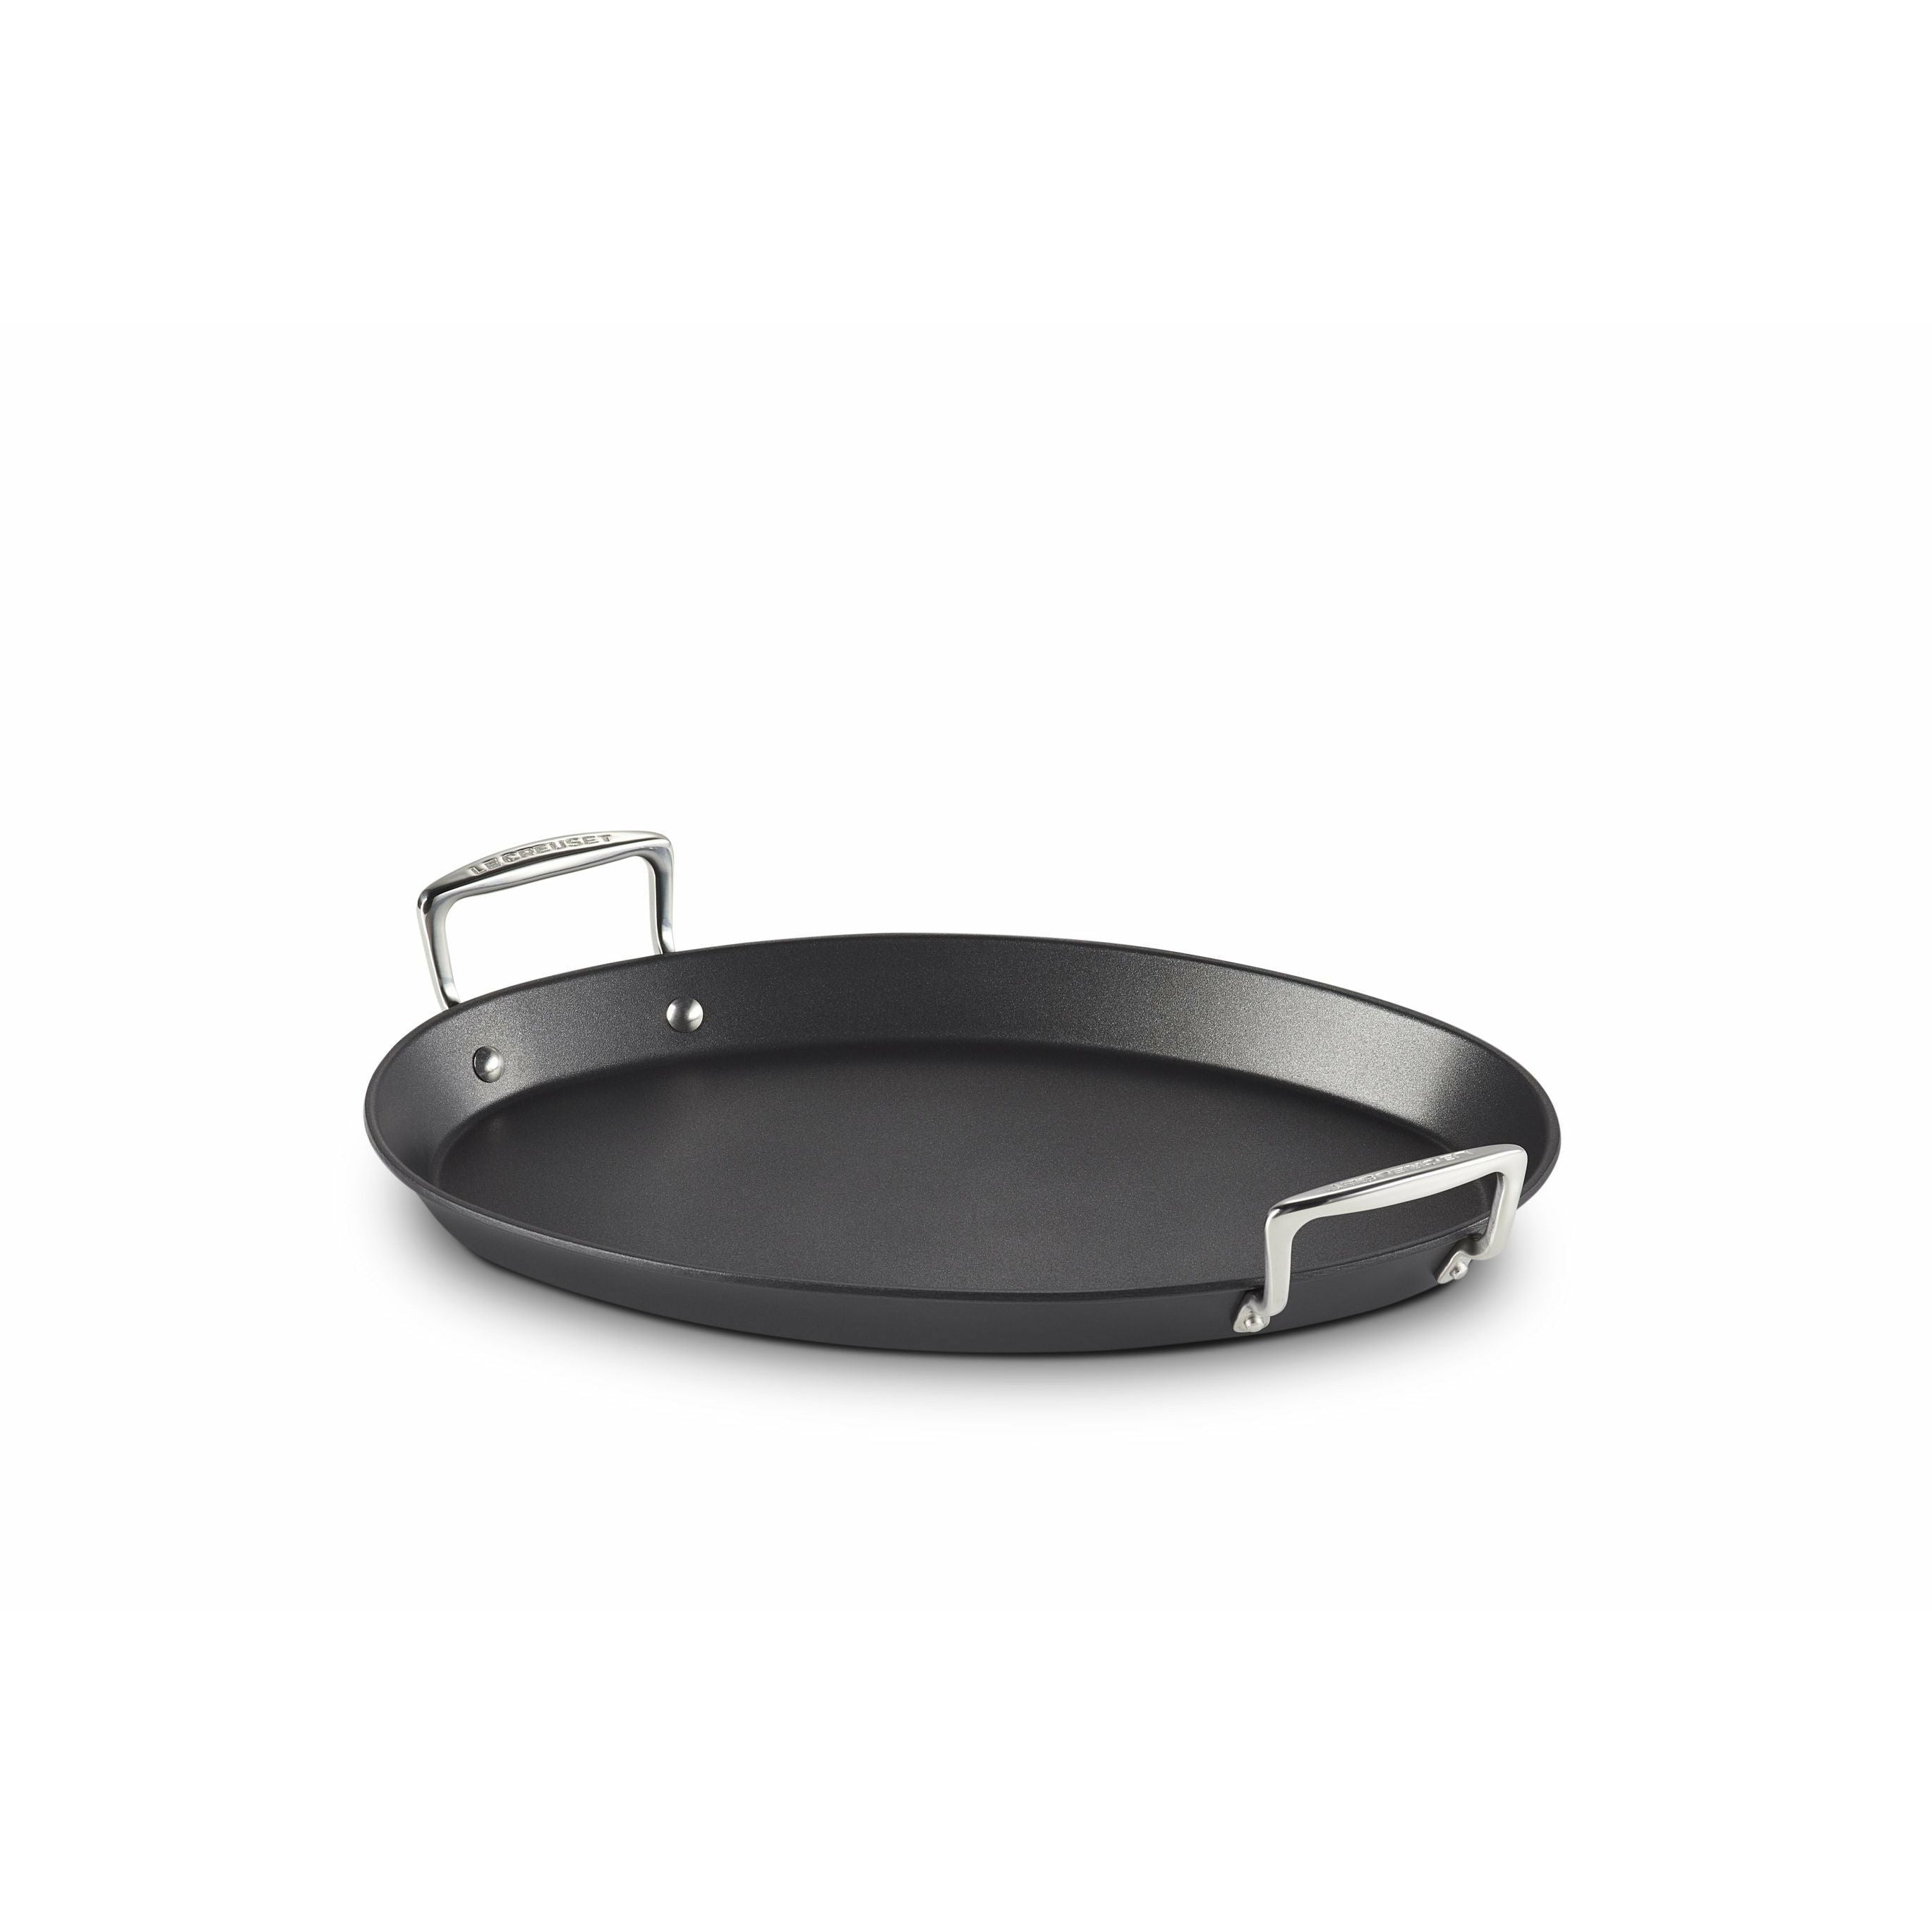 Le Creuset Oval Fishing Pan härdad non-stick, 40 cm